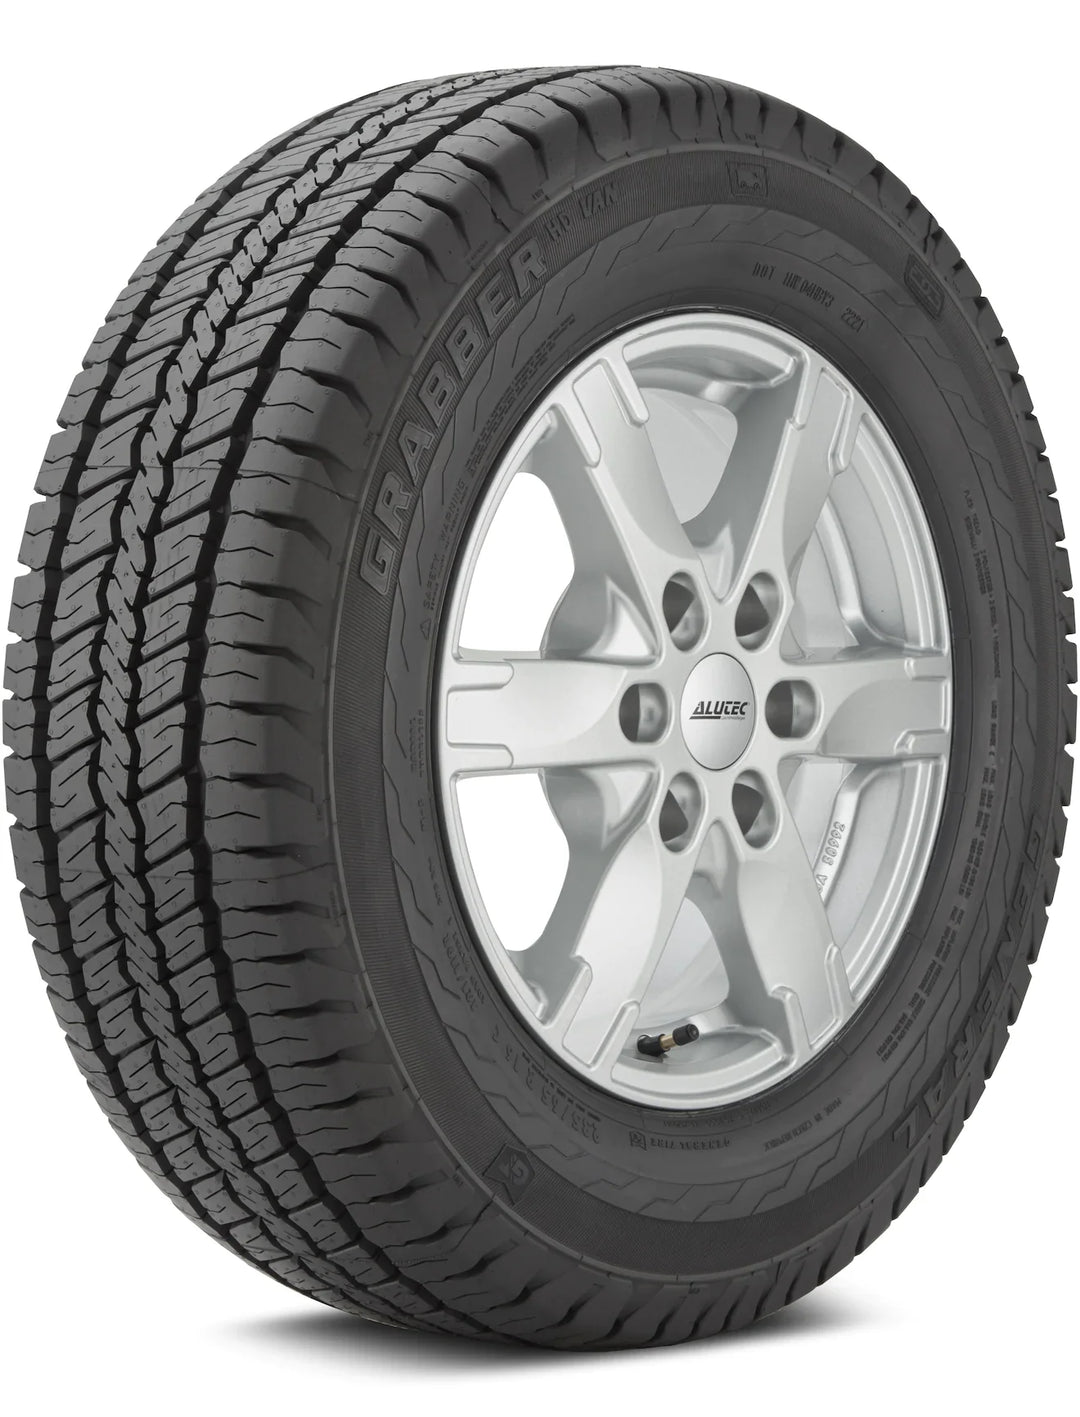 General Tire Grabber HD Van 195/75R16C 107/105R D/8 All Season Tire